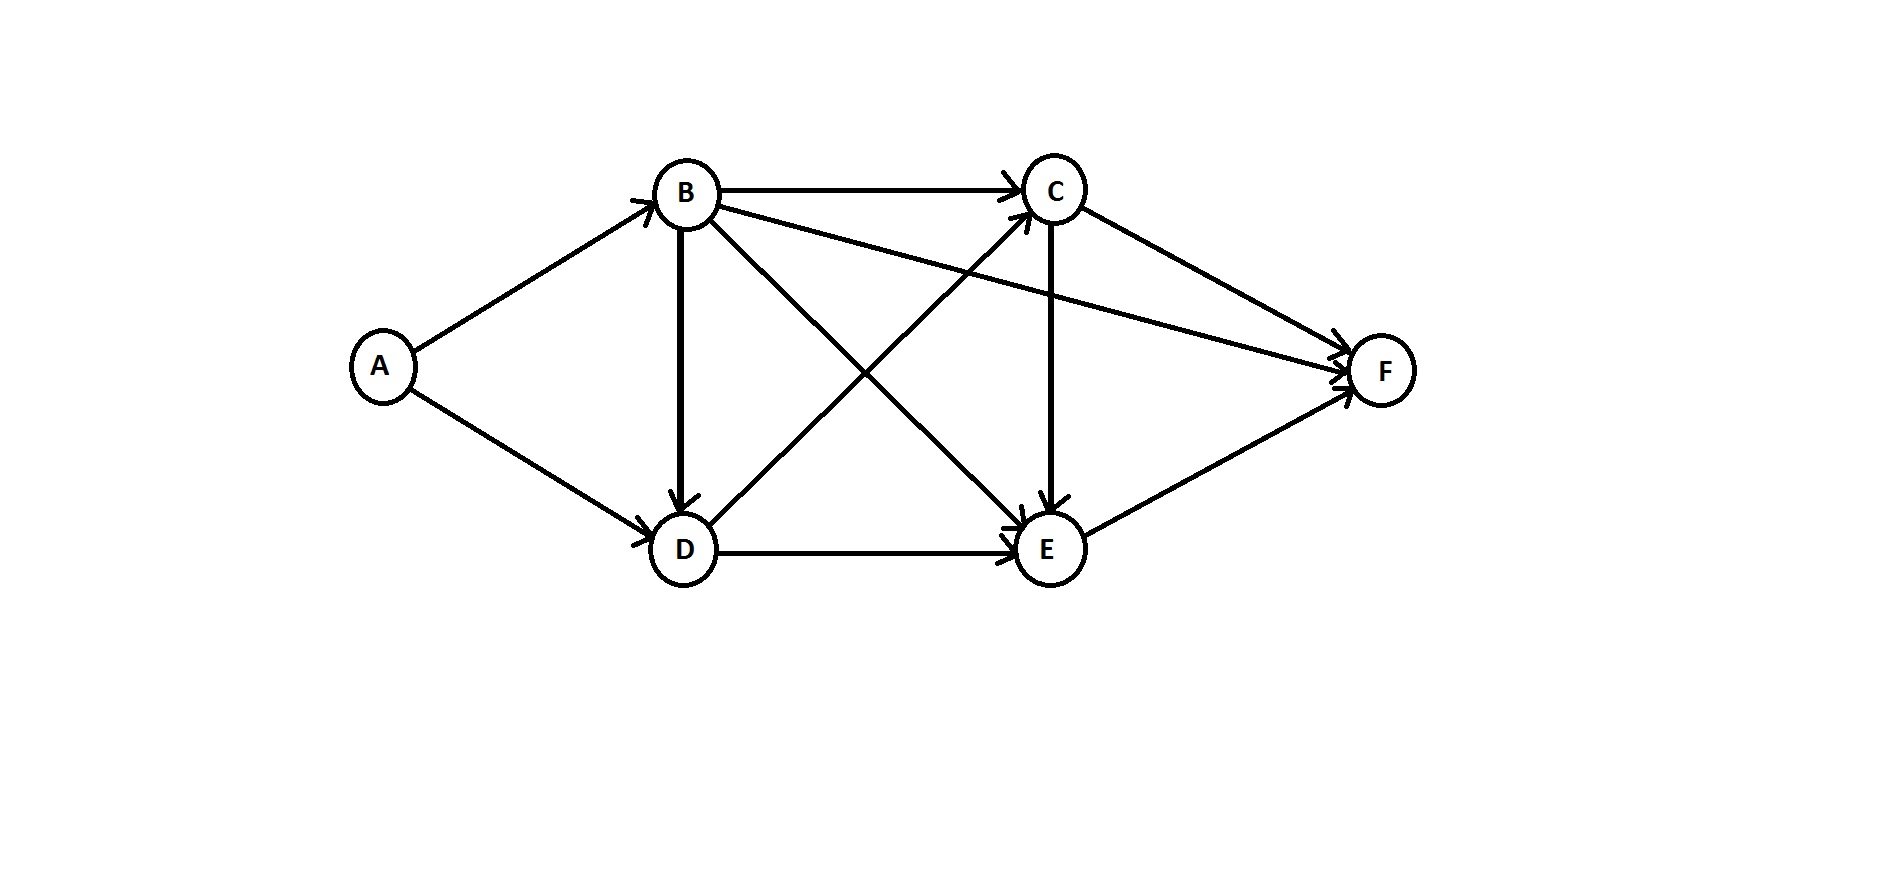 Network.jpg